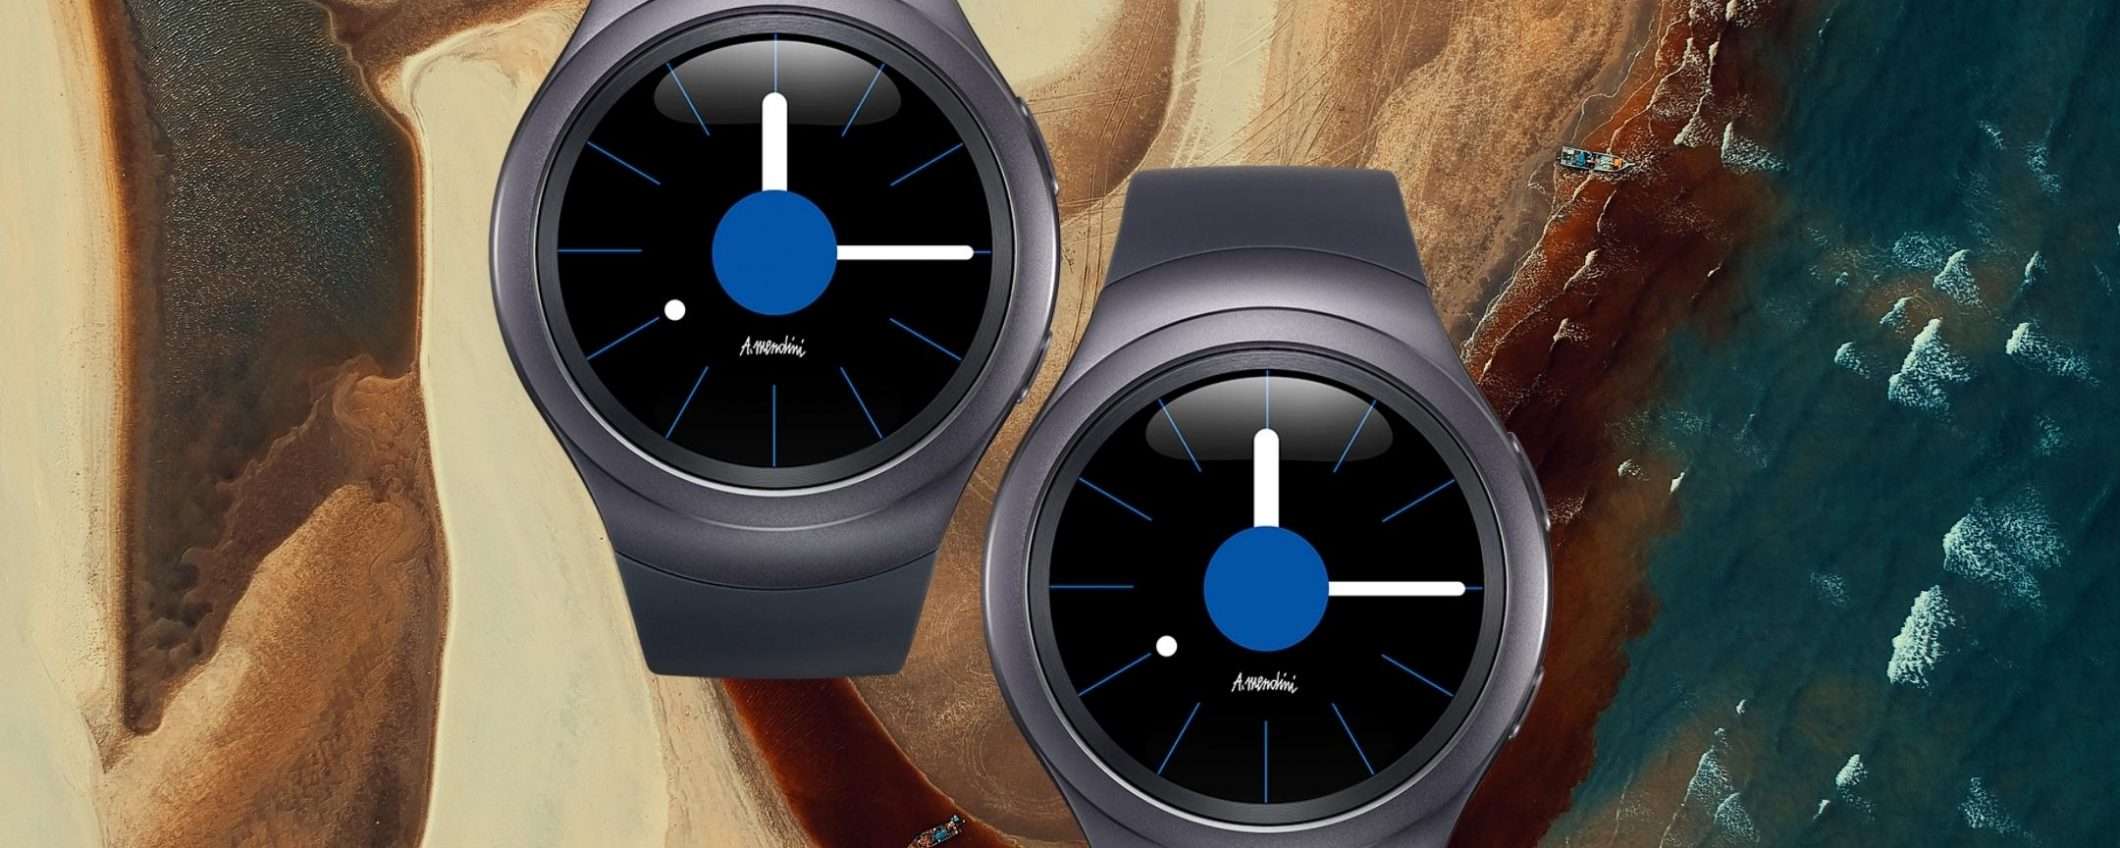 Smartwatch Samsung BESTIALE: in promo su eBay